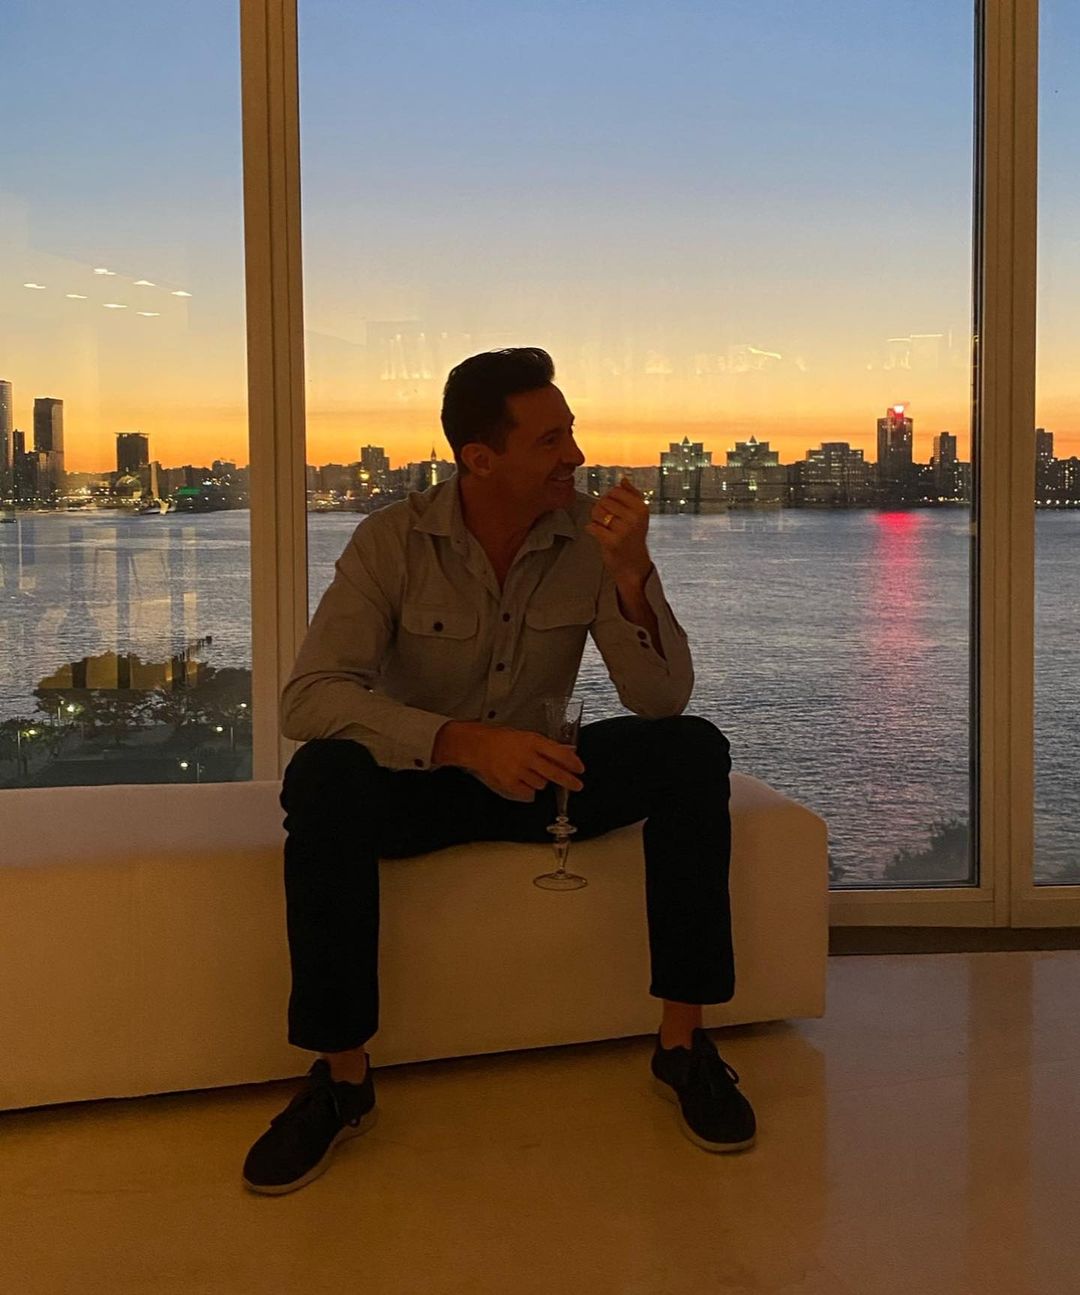 Where Does Hugh Jackman Live? Photos Inside His NYC Penthouse